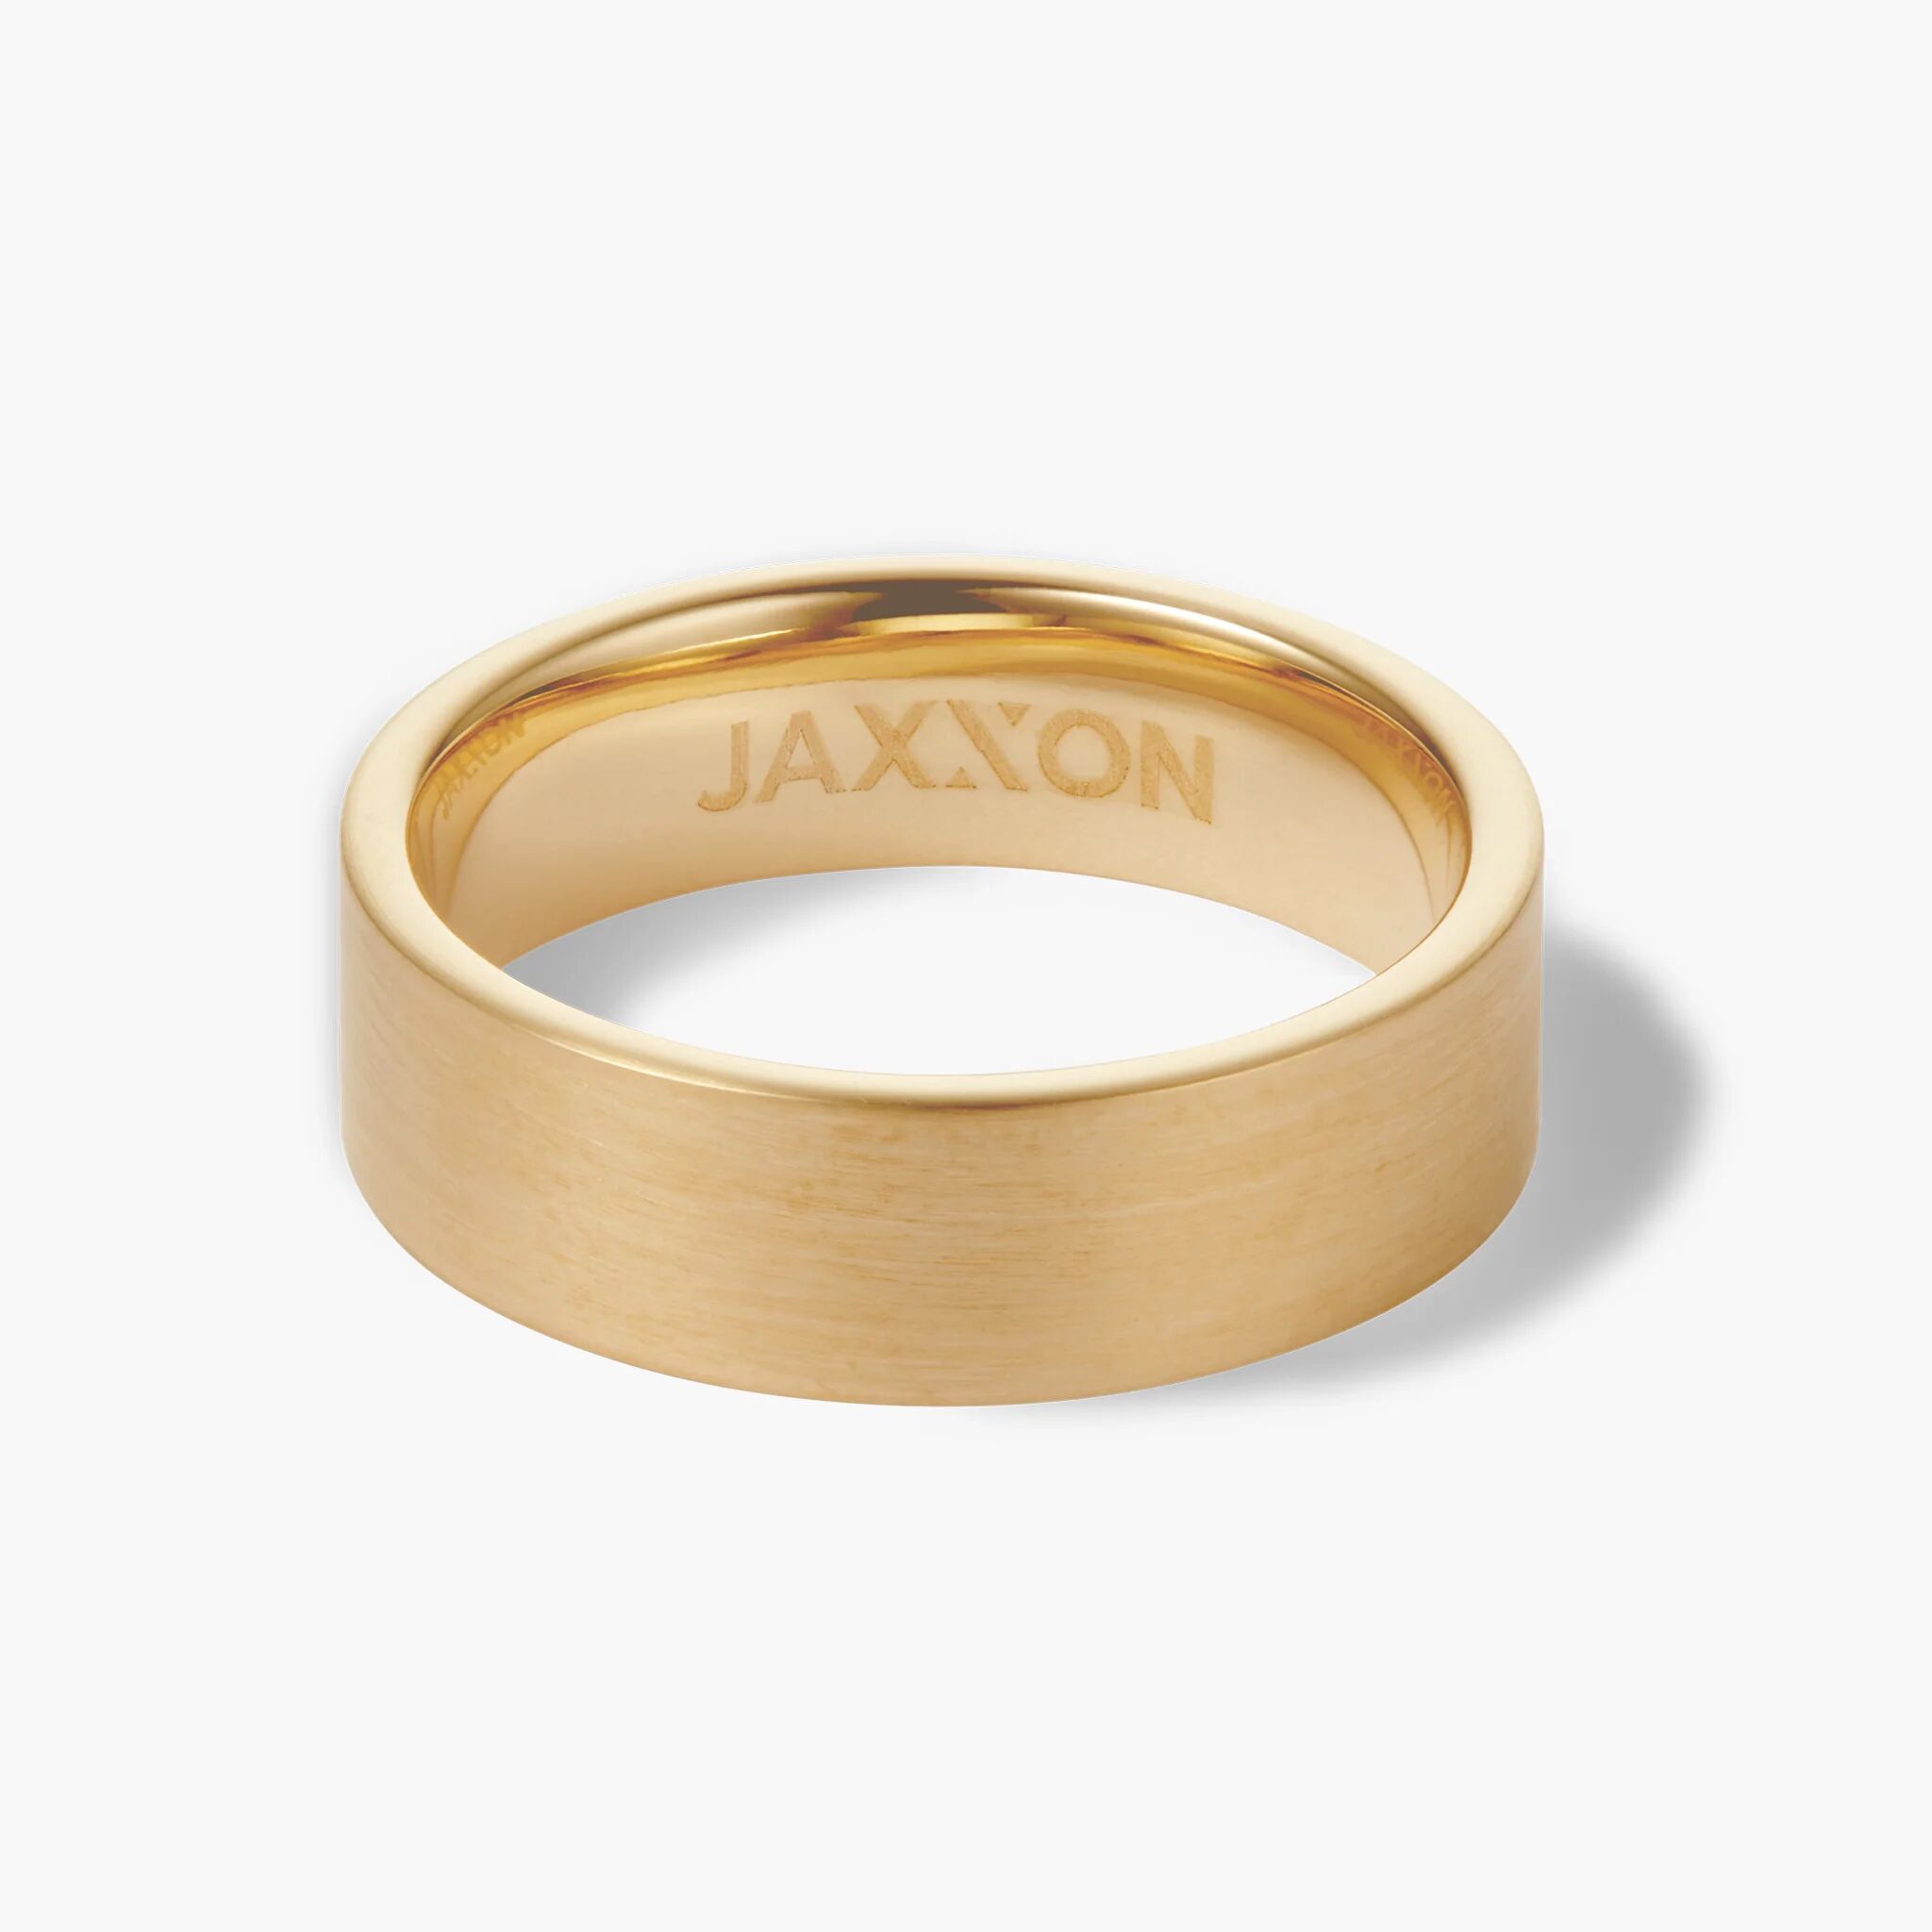 JAXXON 7mm Classic Men's Solid Gold Wedding Band   Size 9